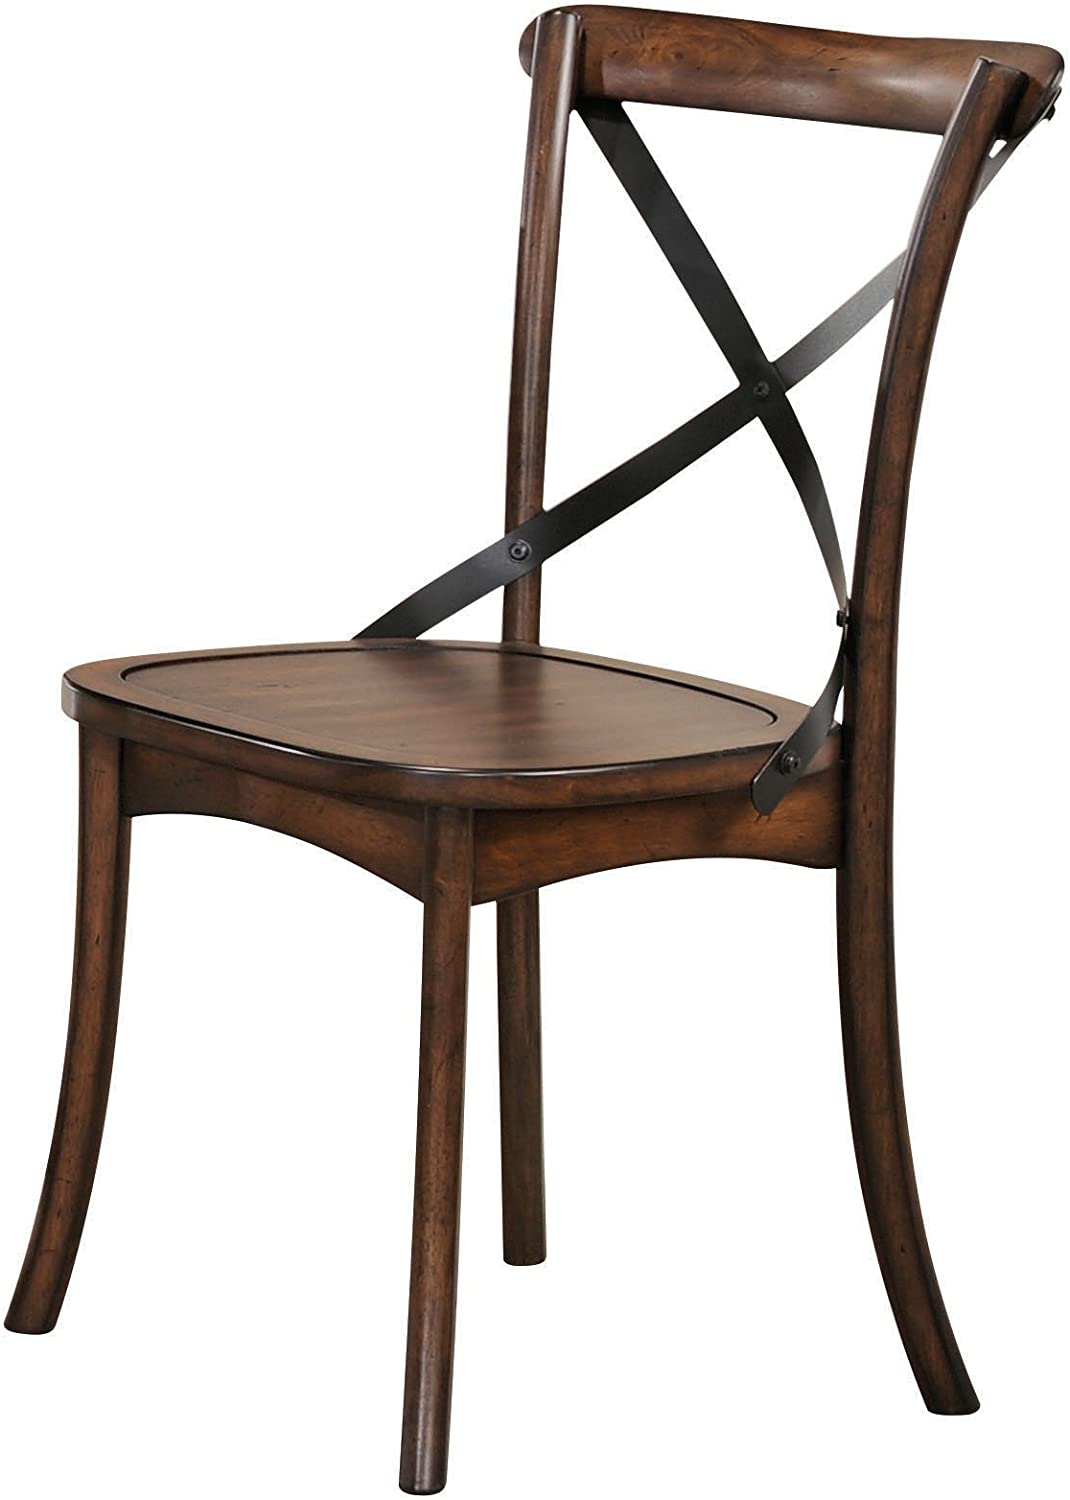 18" X 21" X 35" Dark Oak  Black Wood Side Chair Set2